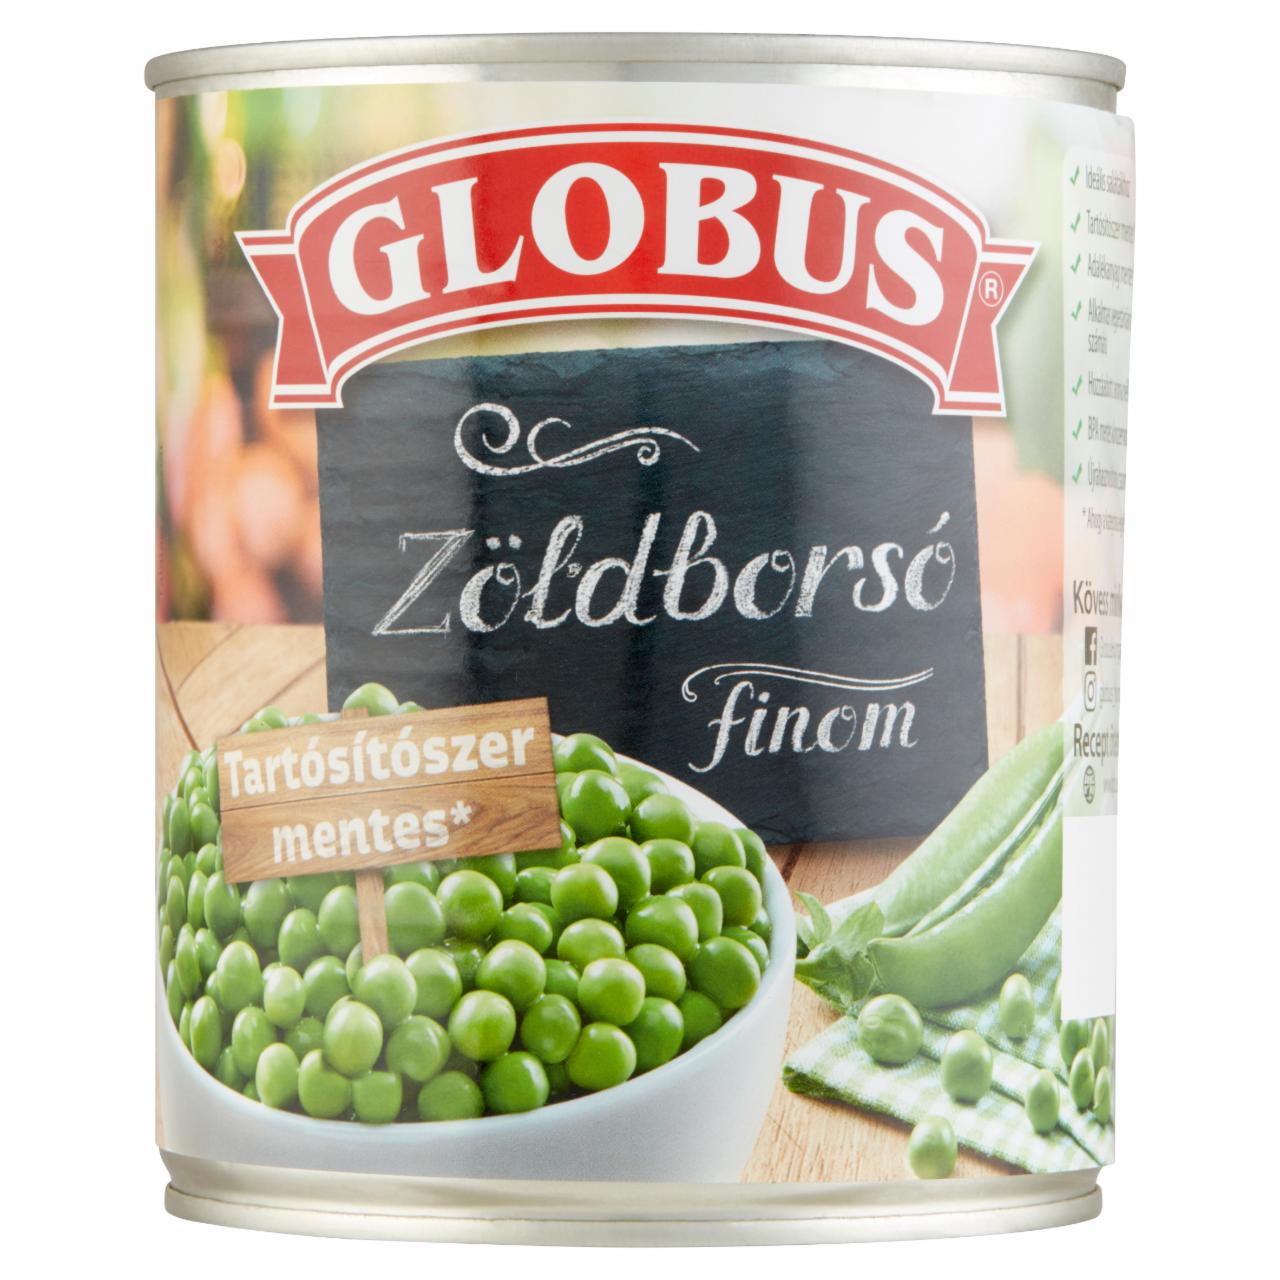 Képek - Globus finom zöldborsó 800 g